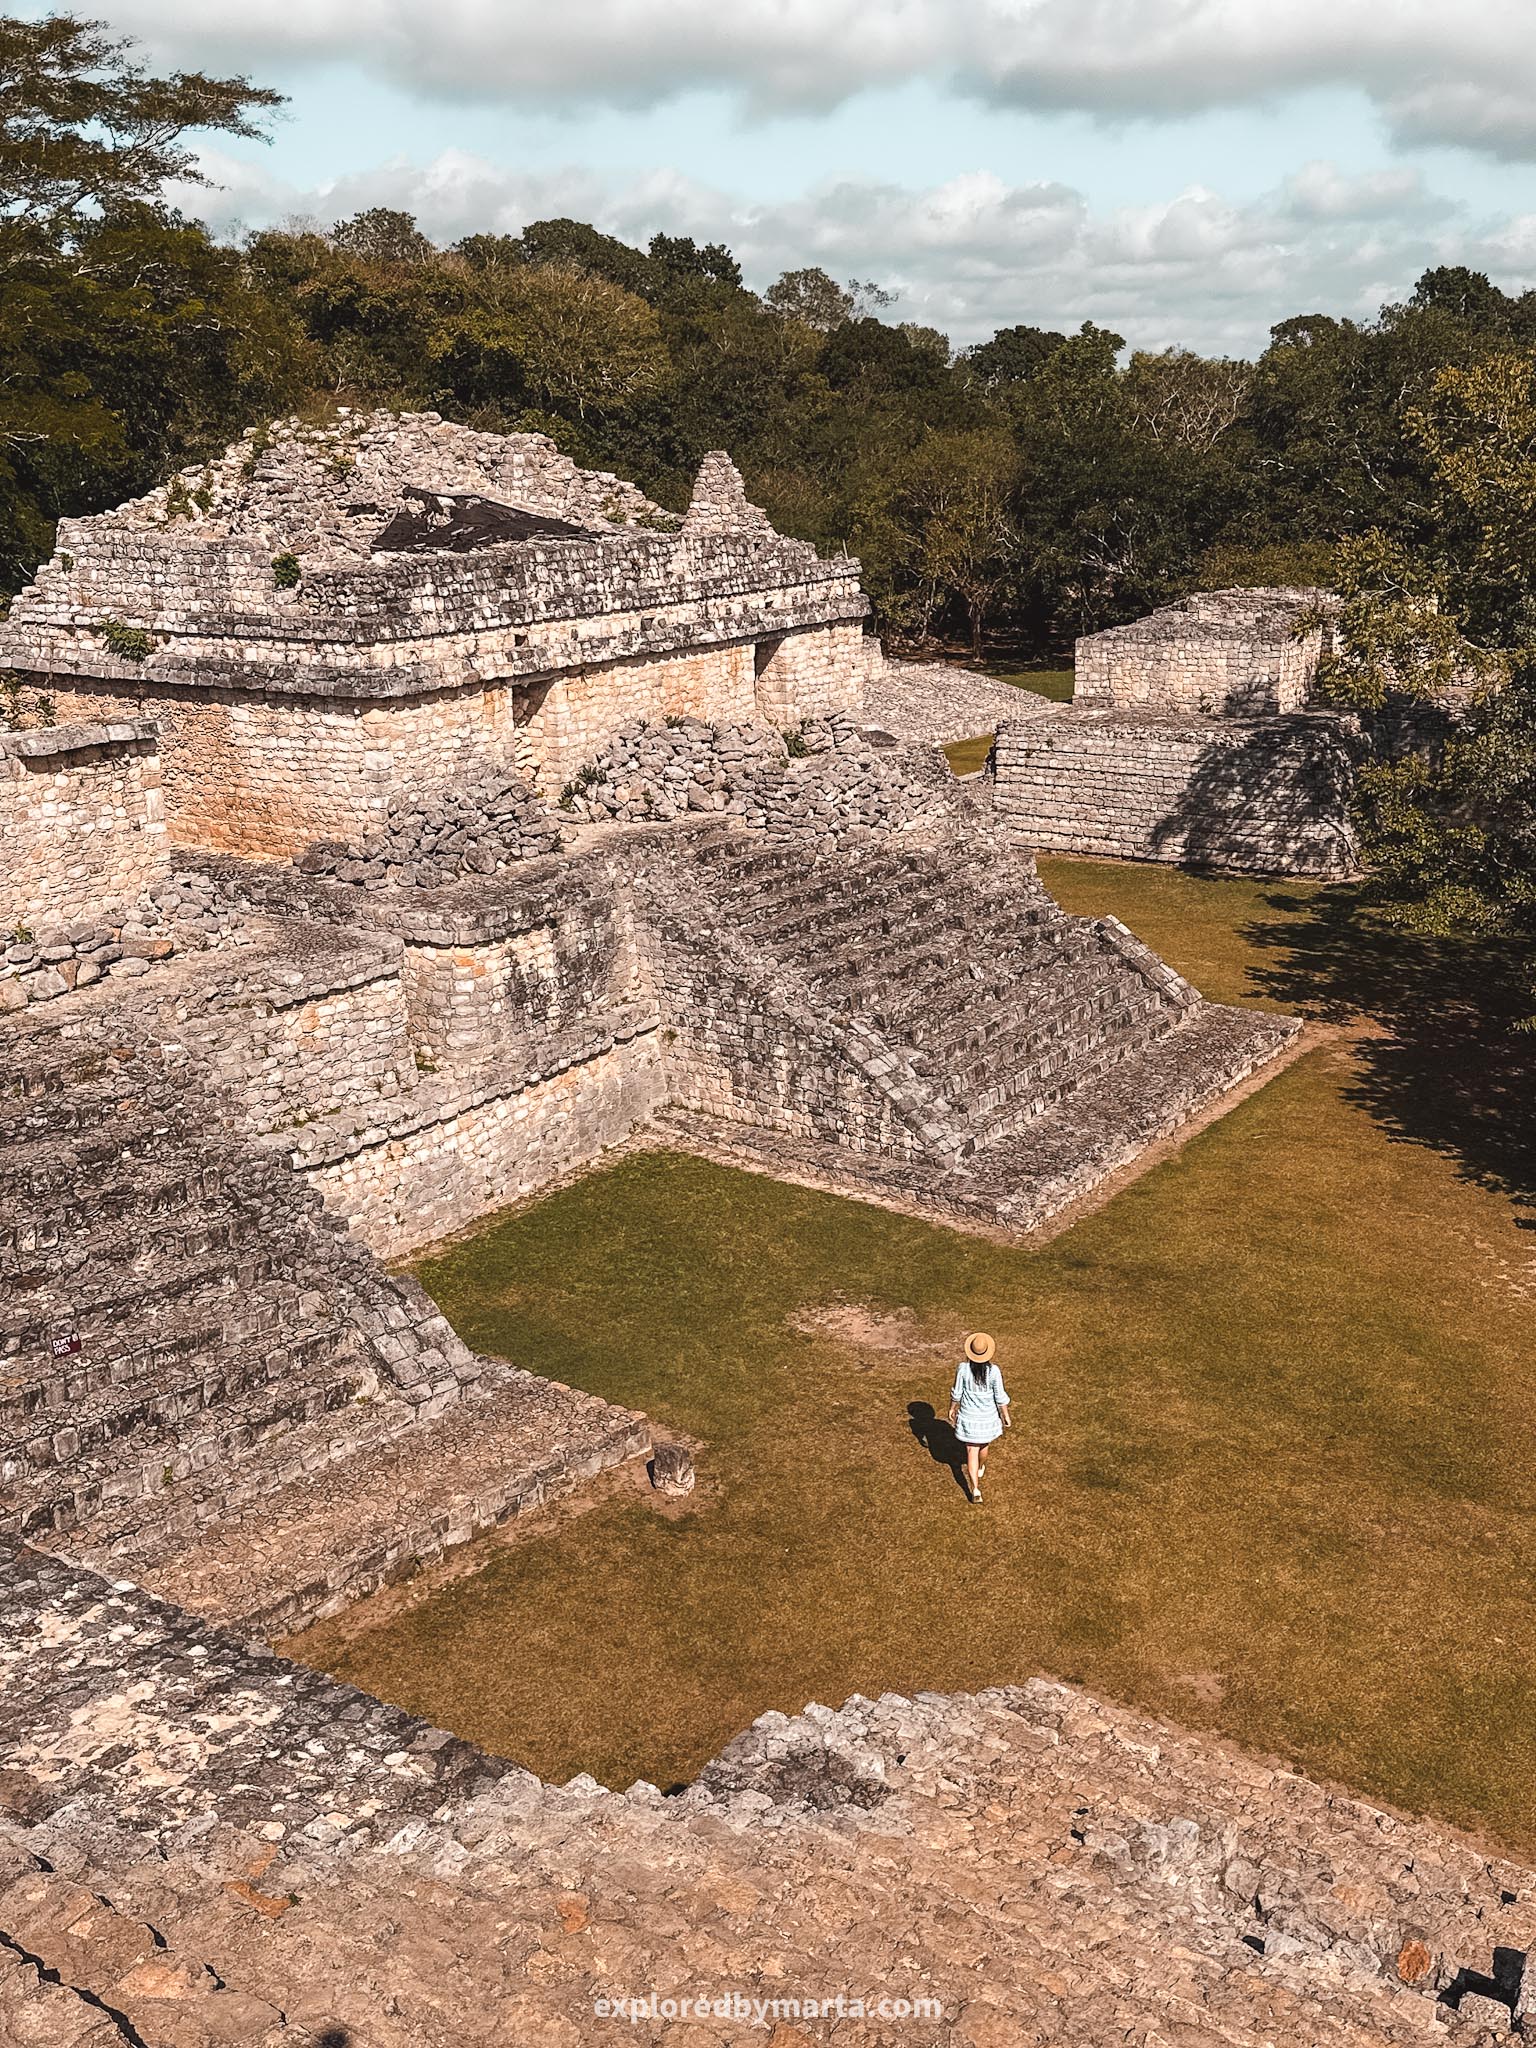 Yucatan peninsula, Mexico - Mayan pyramids and Mayan ruins around Yucatan - Ek Balam archaeological zone